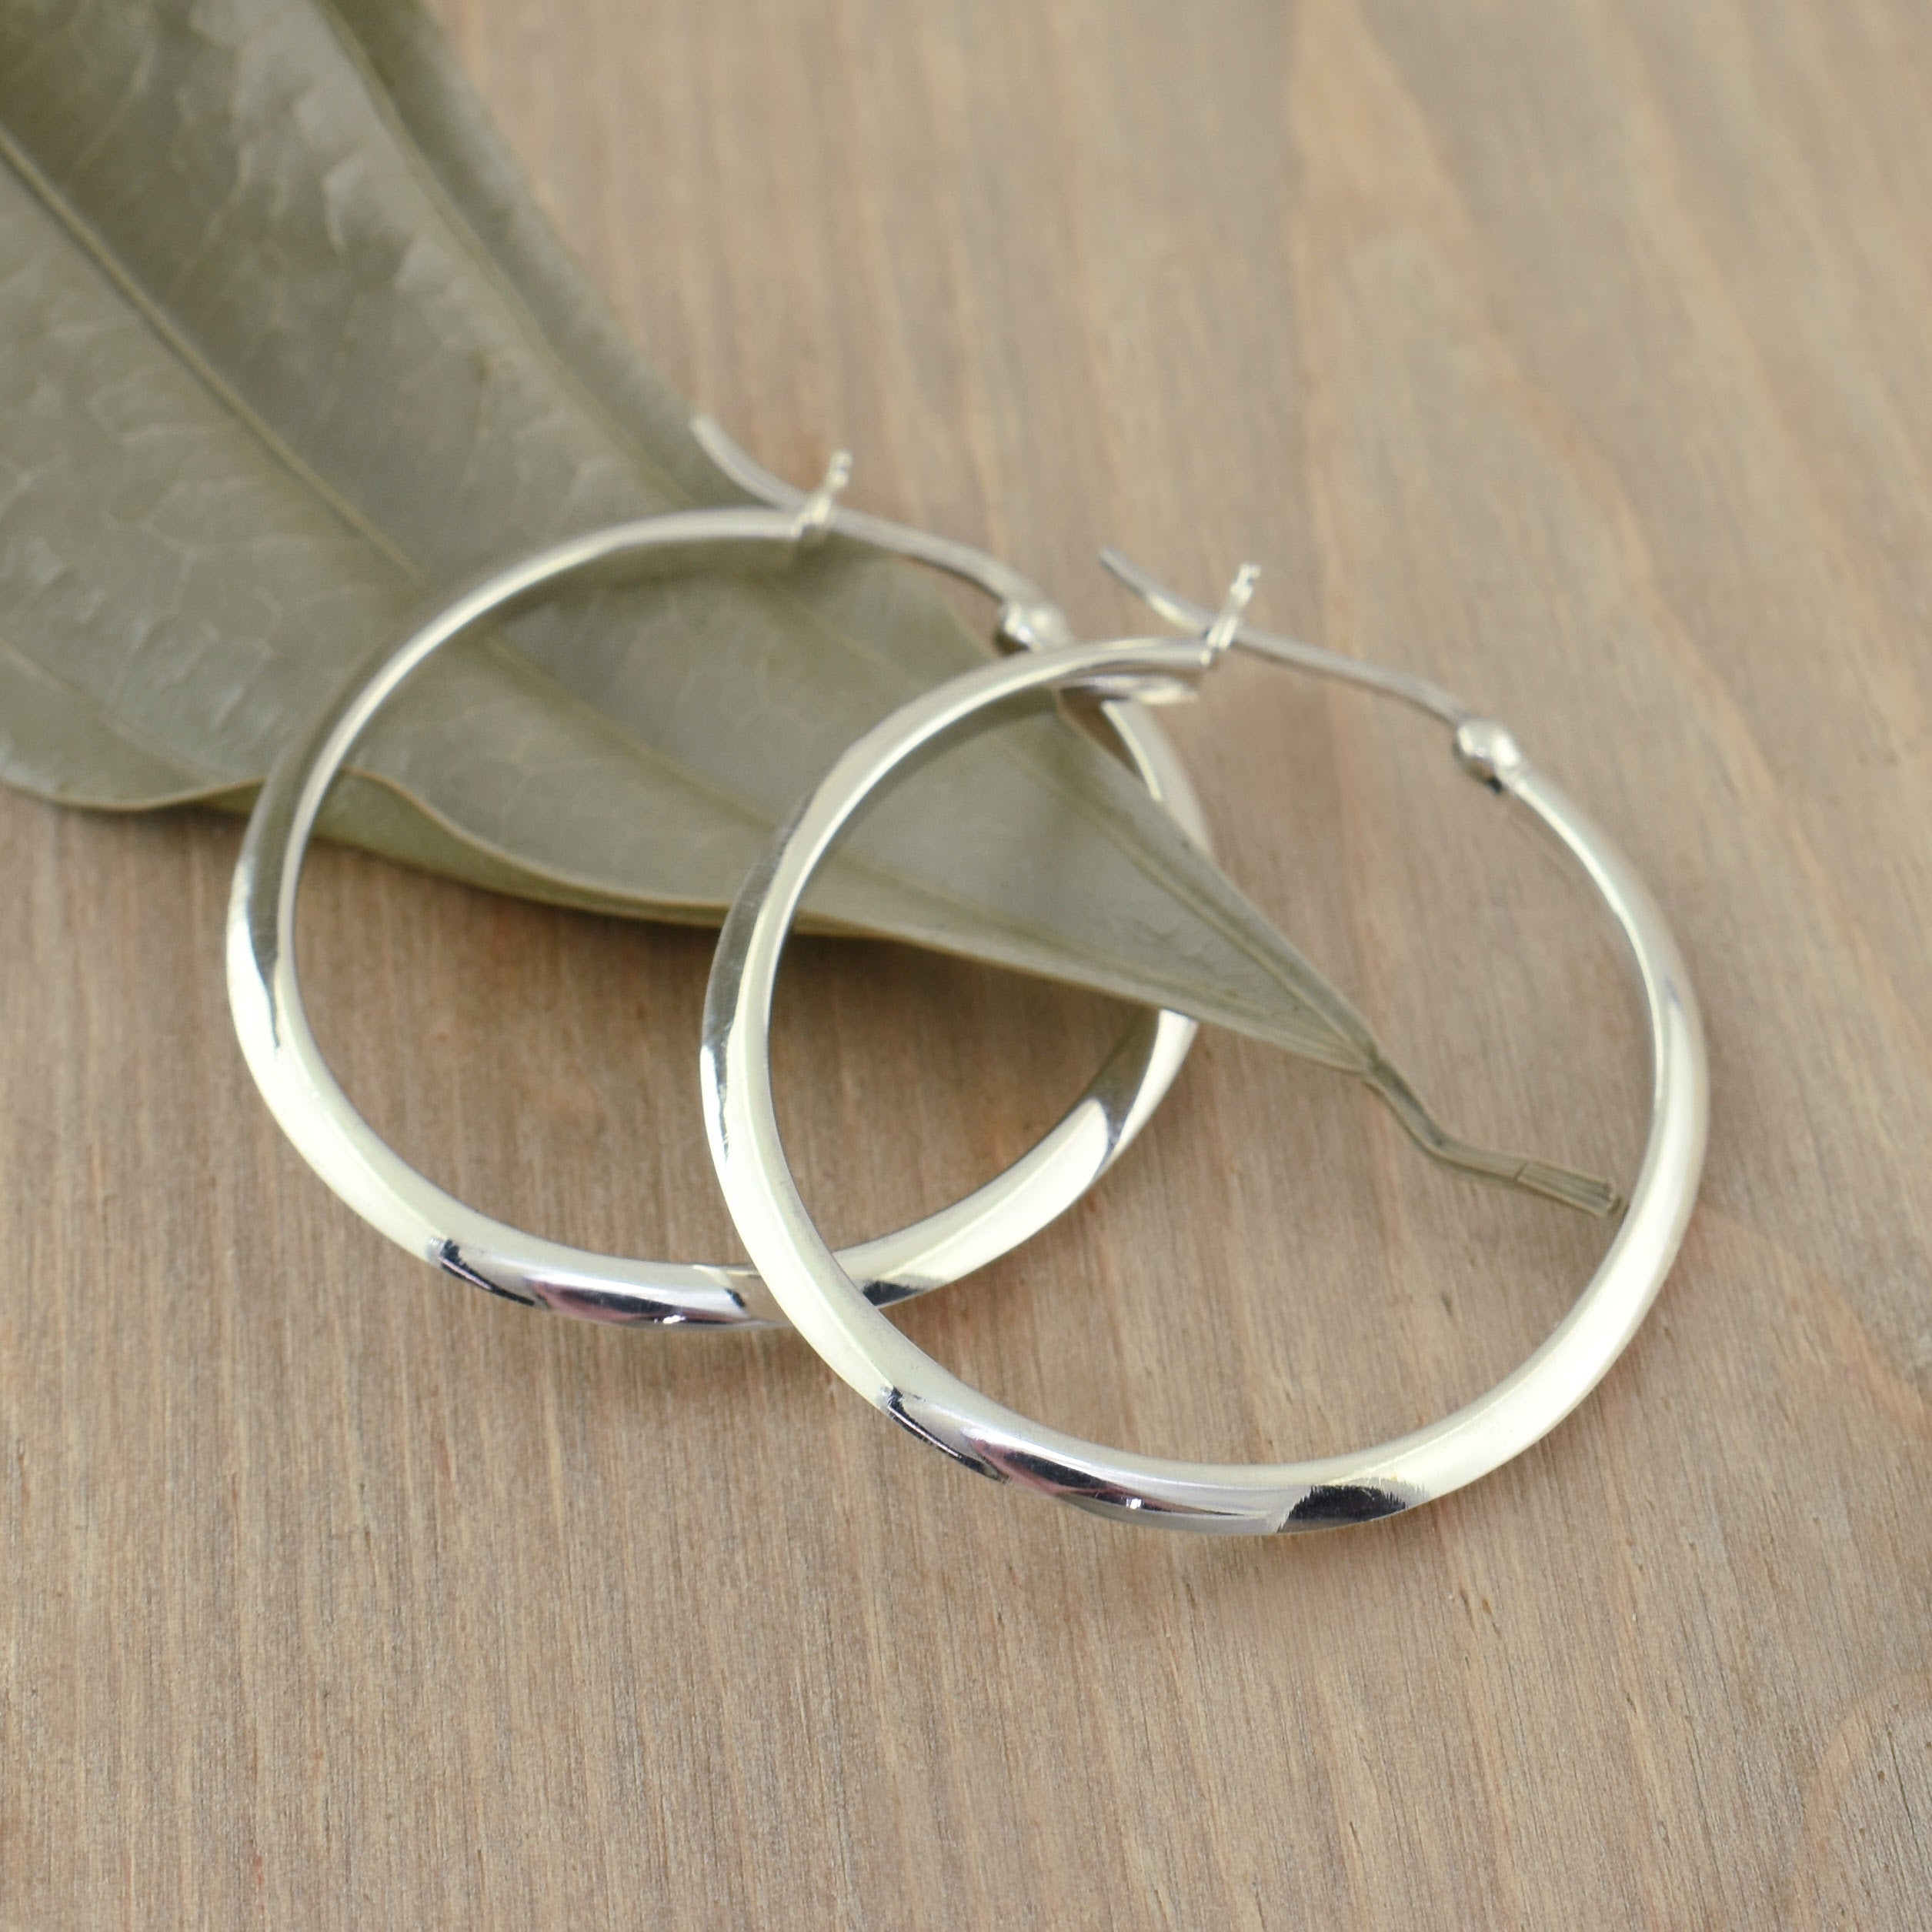 Overtly Oval Hoop Earrings in .925 sterling silver